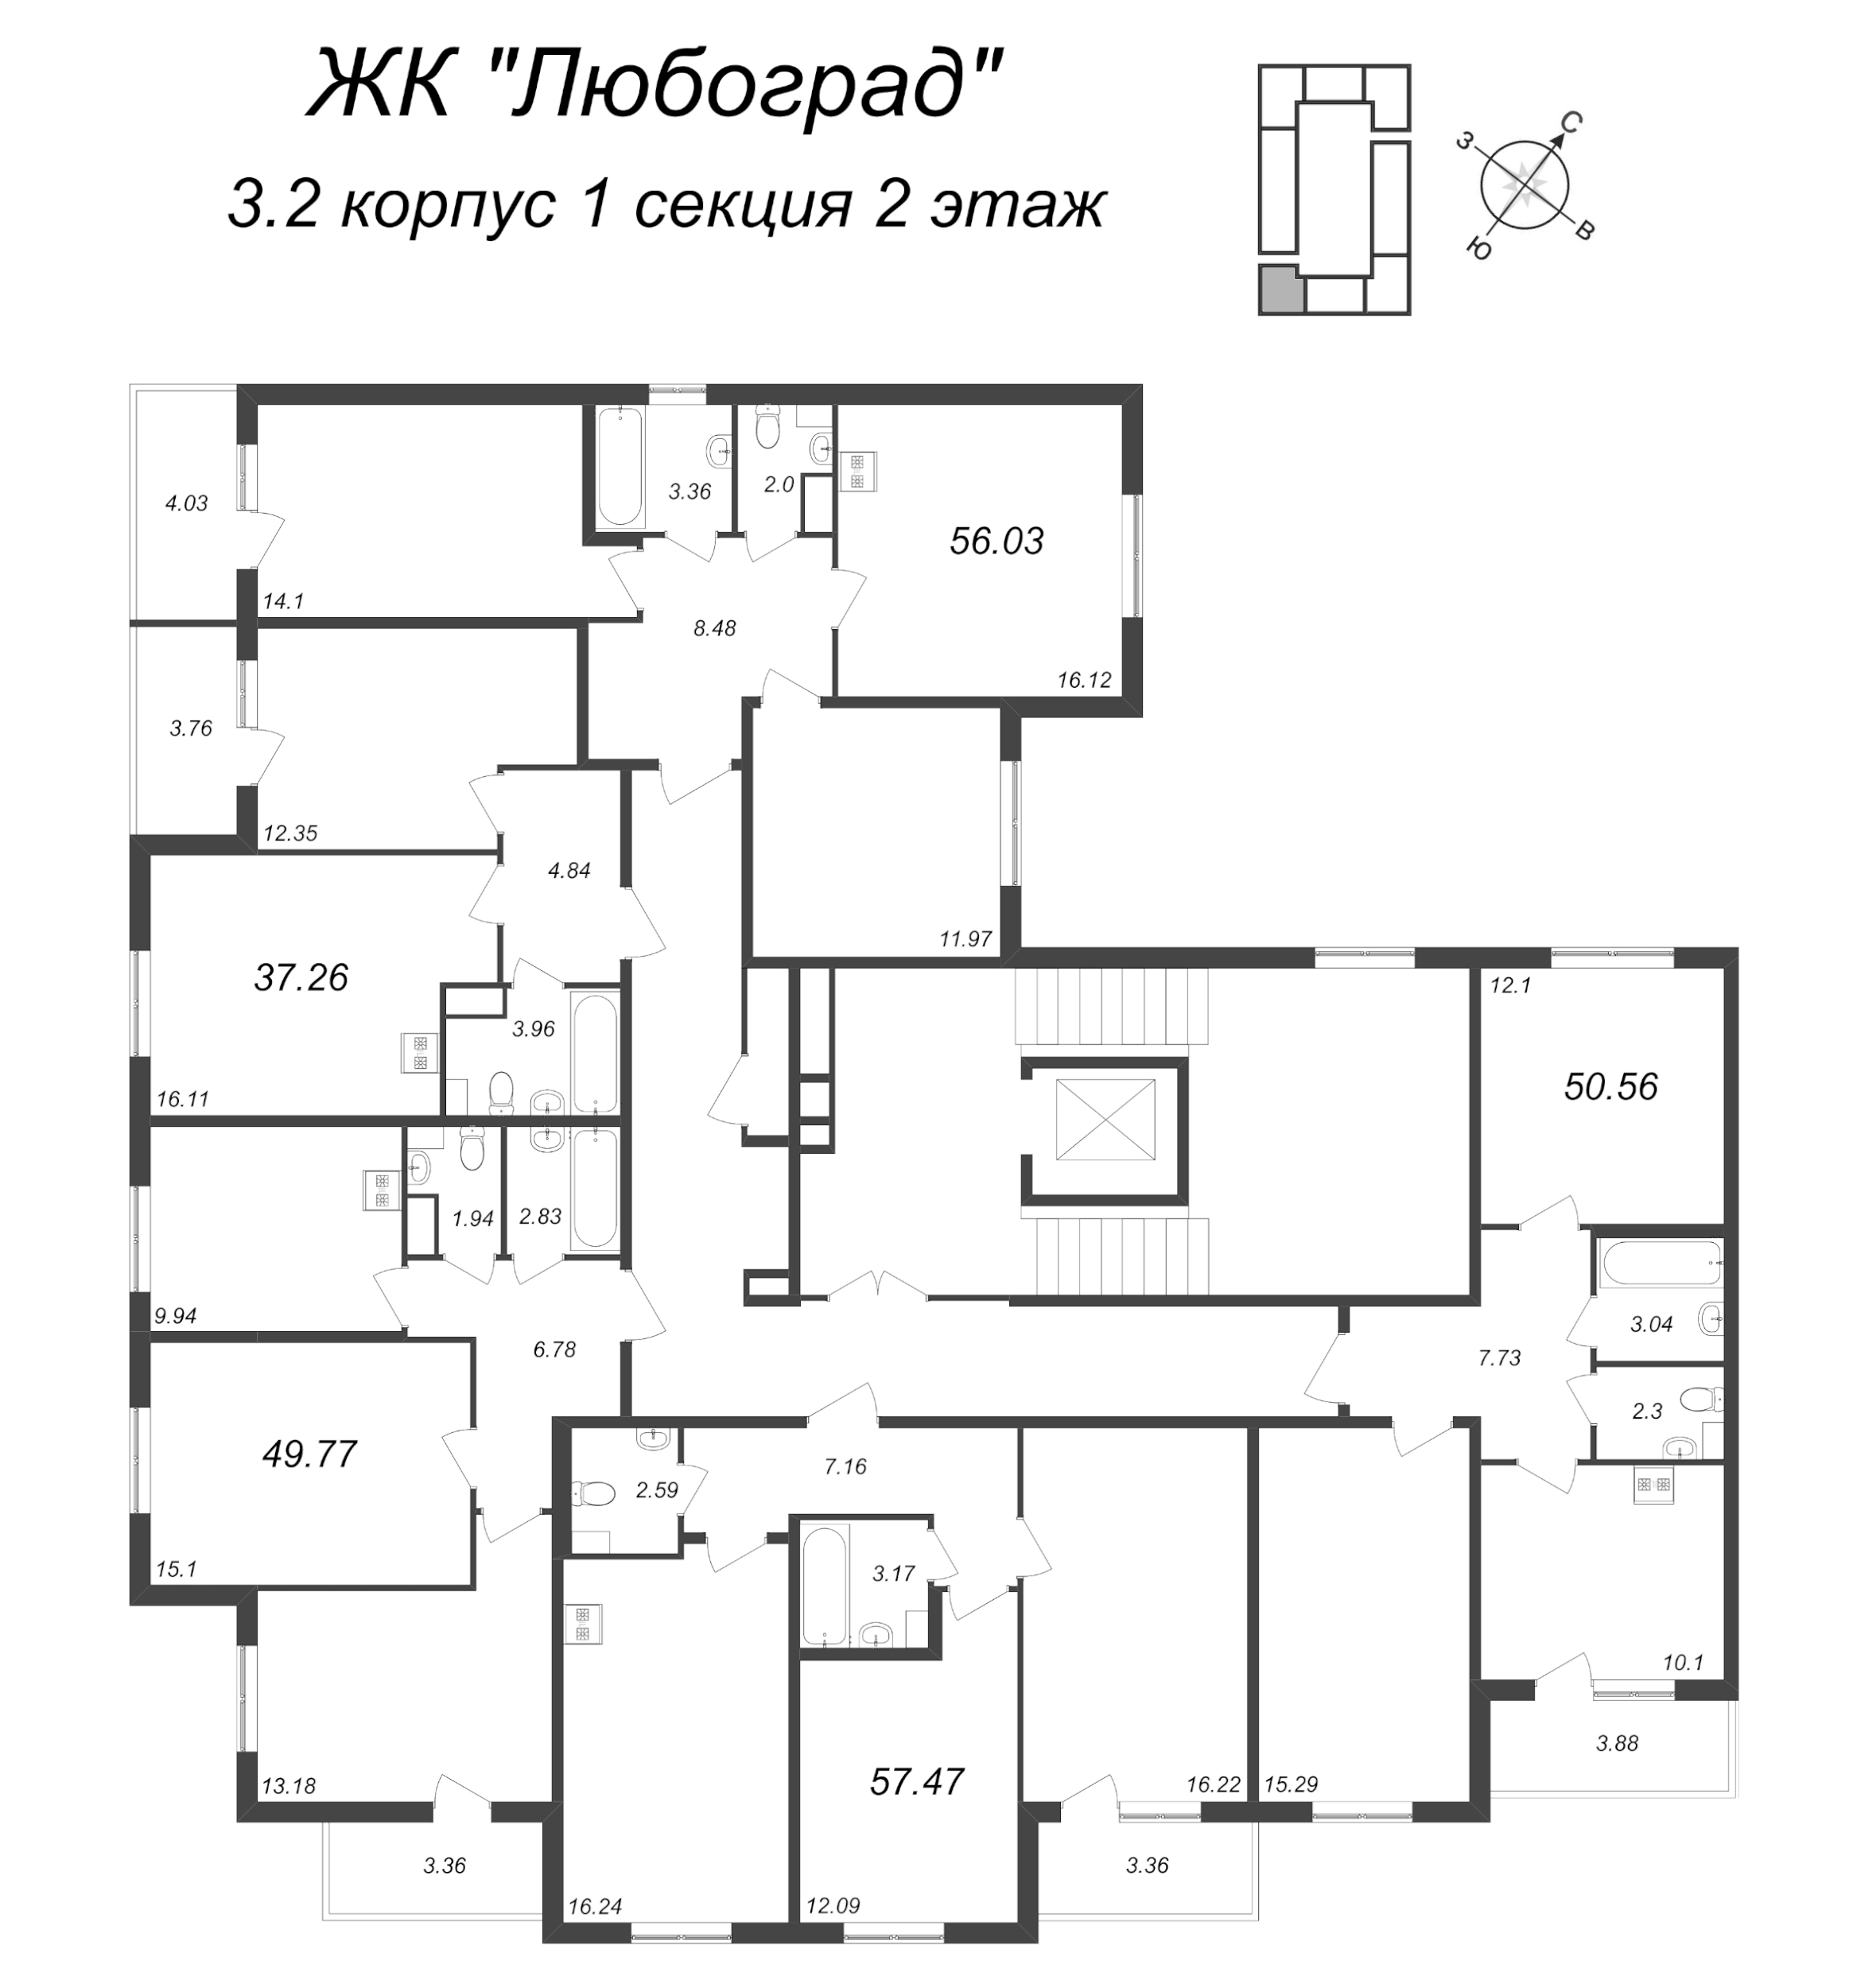 3-комнатная (Евро) квартира, 57.47 м² - планировка этажа